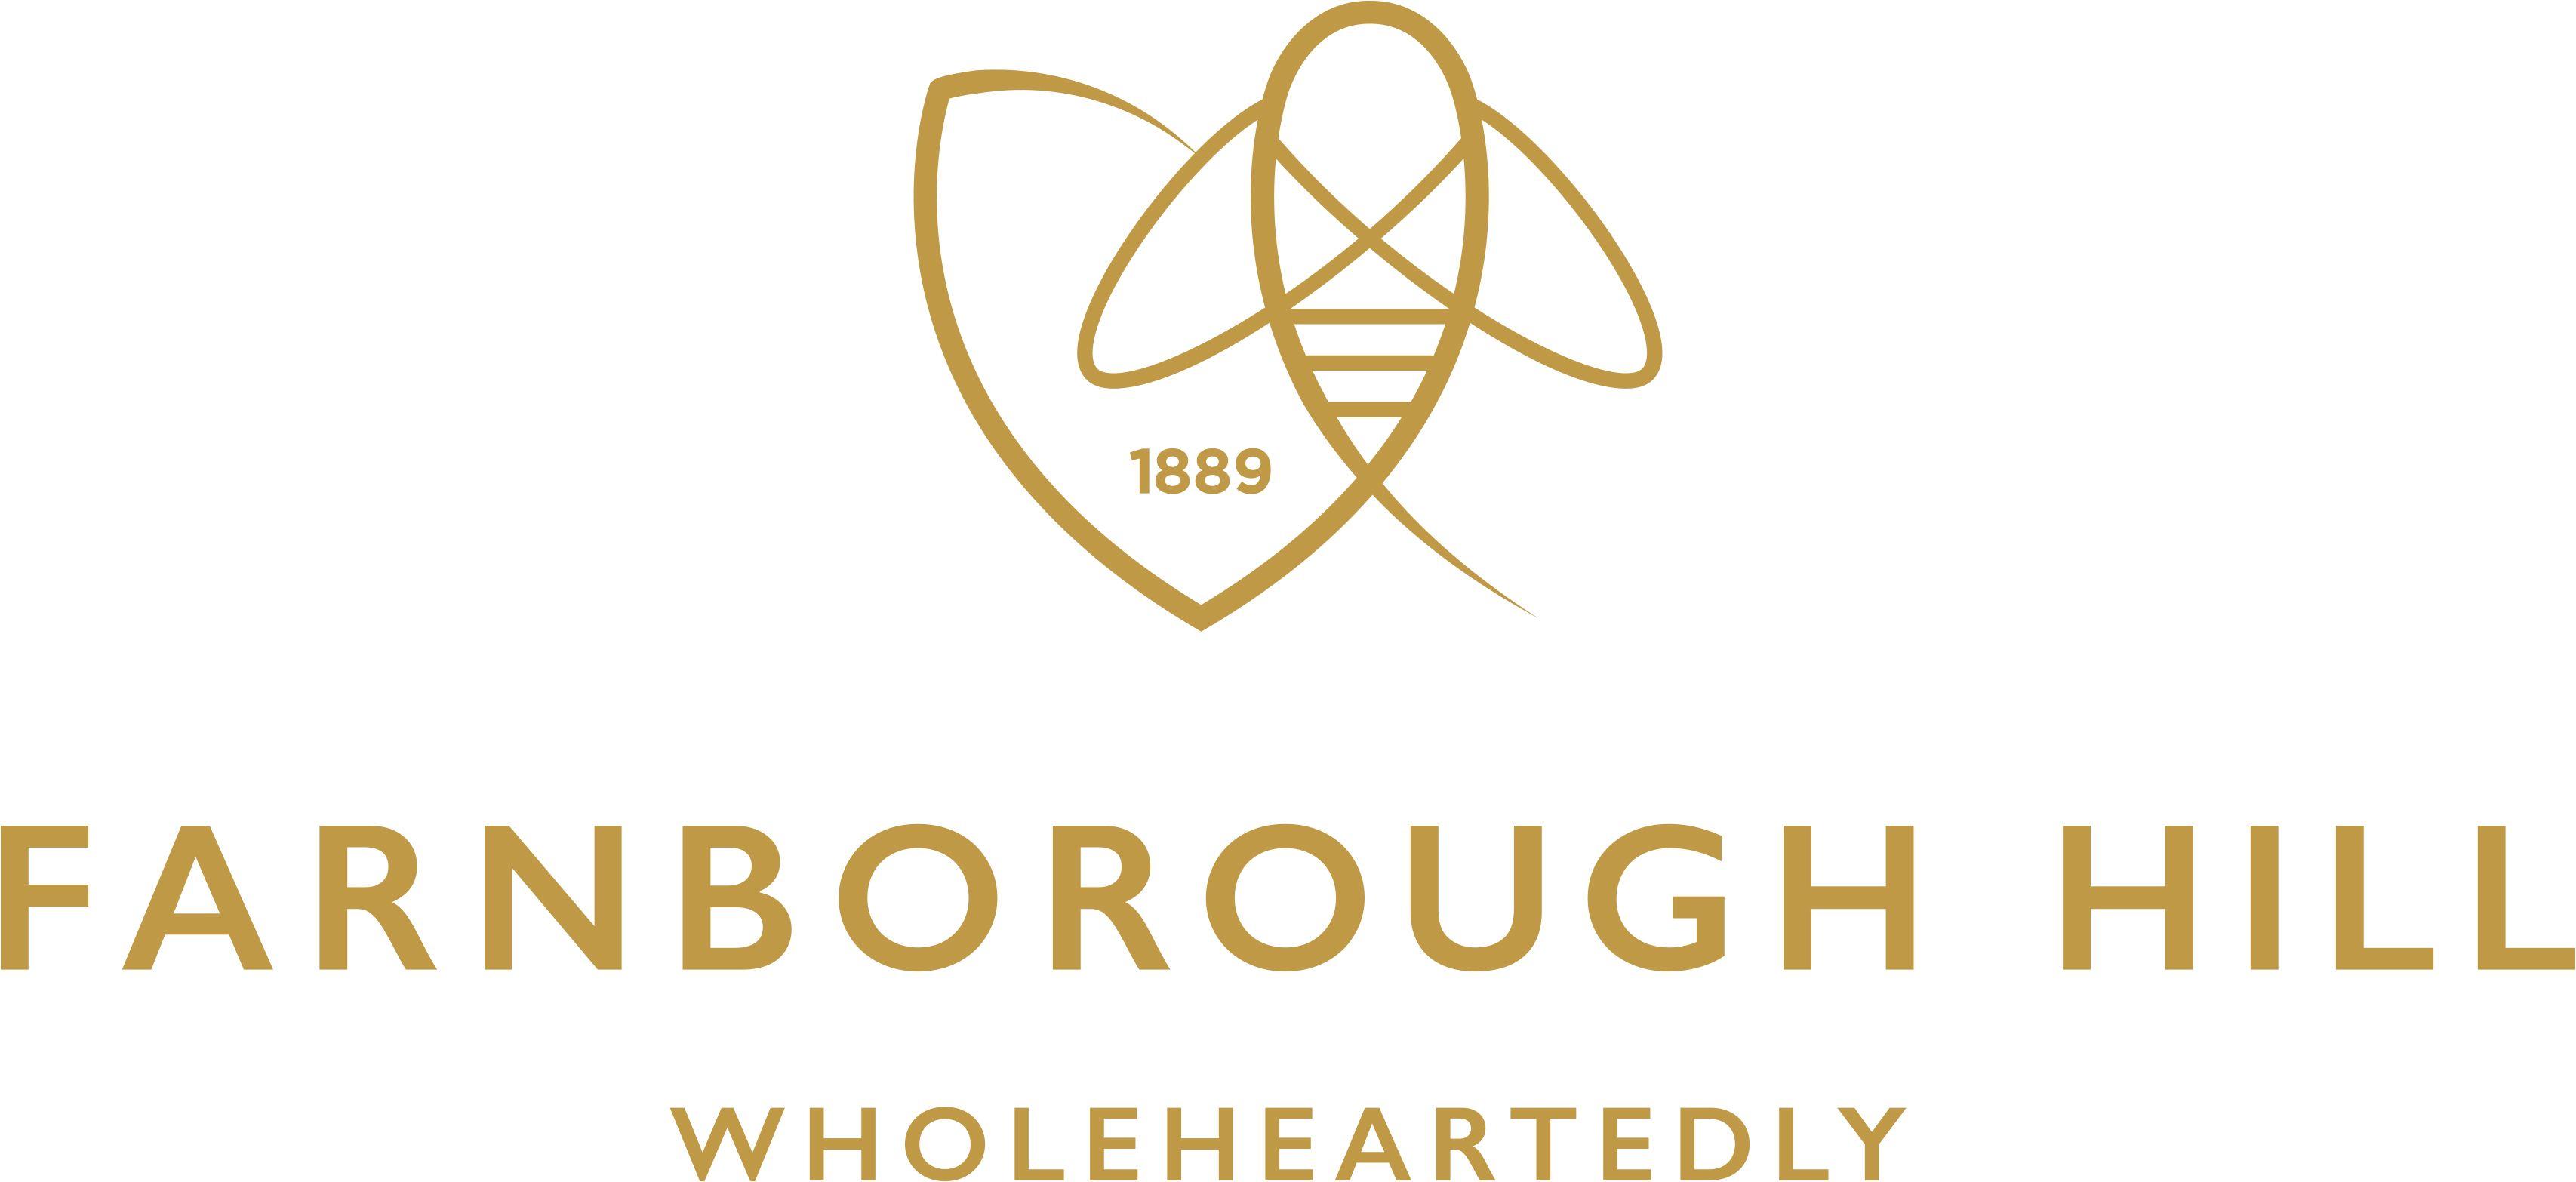 Consideration Logo - Farnborough Hill Unveils a New Look